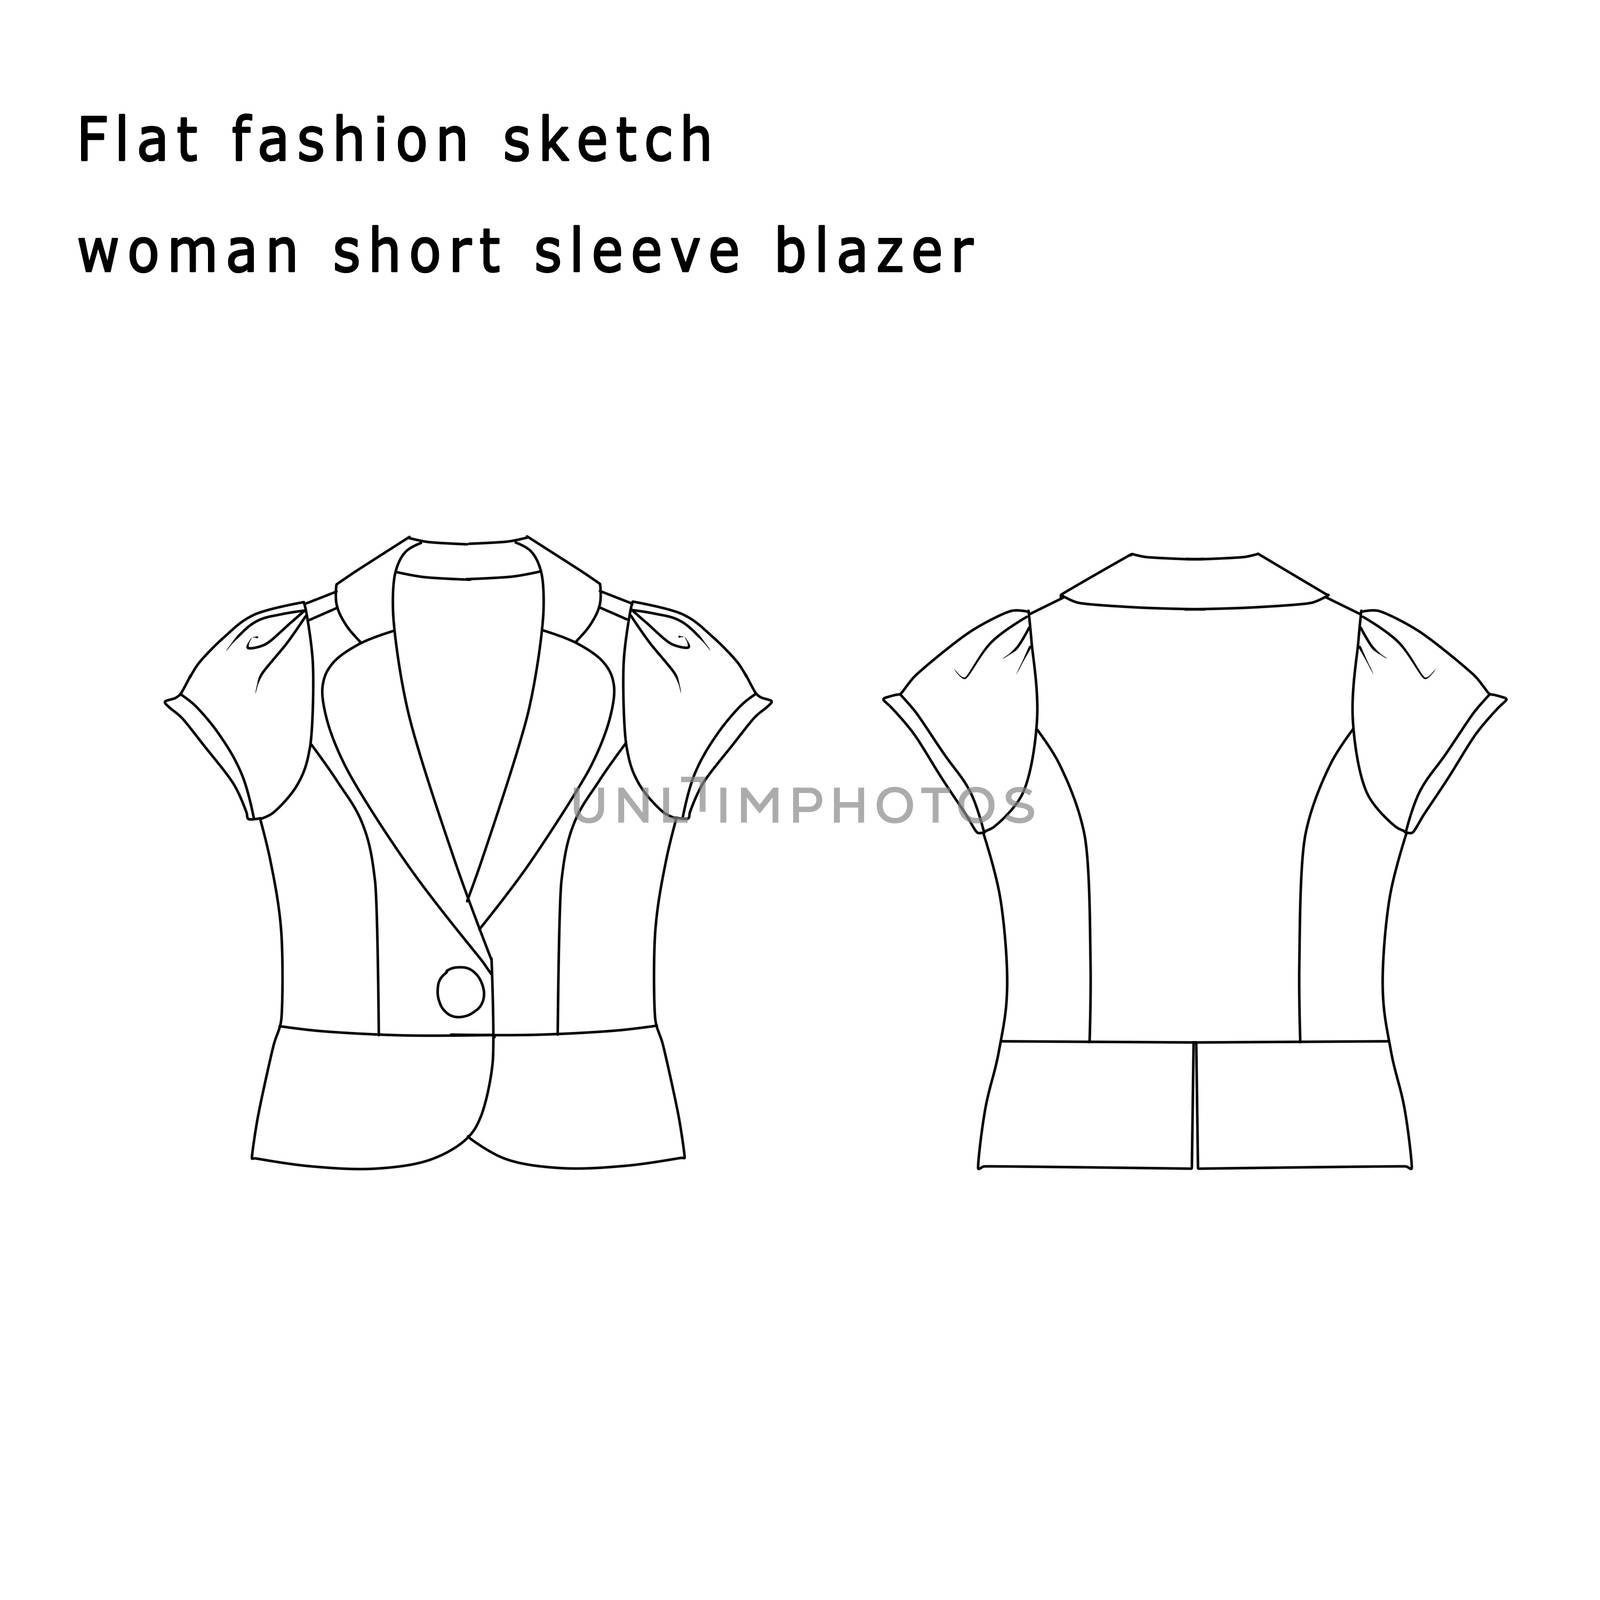 Fashion Illustration - Fashion Flat template - Woman short Blazer